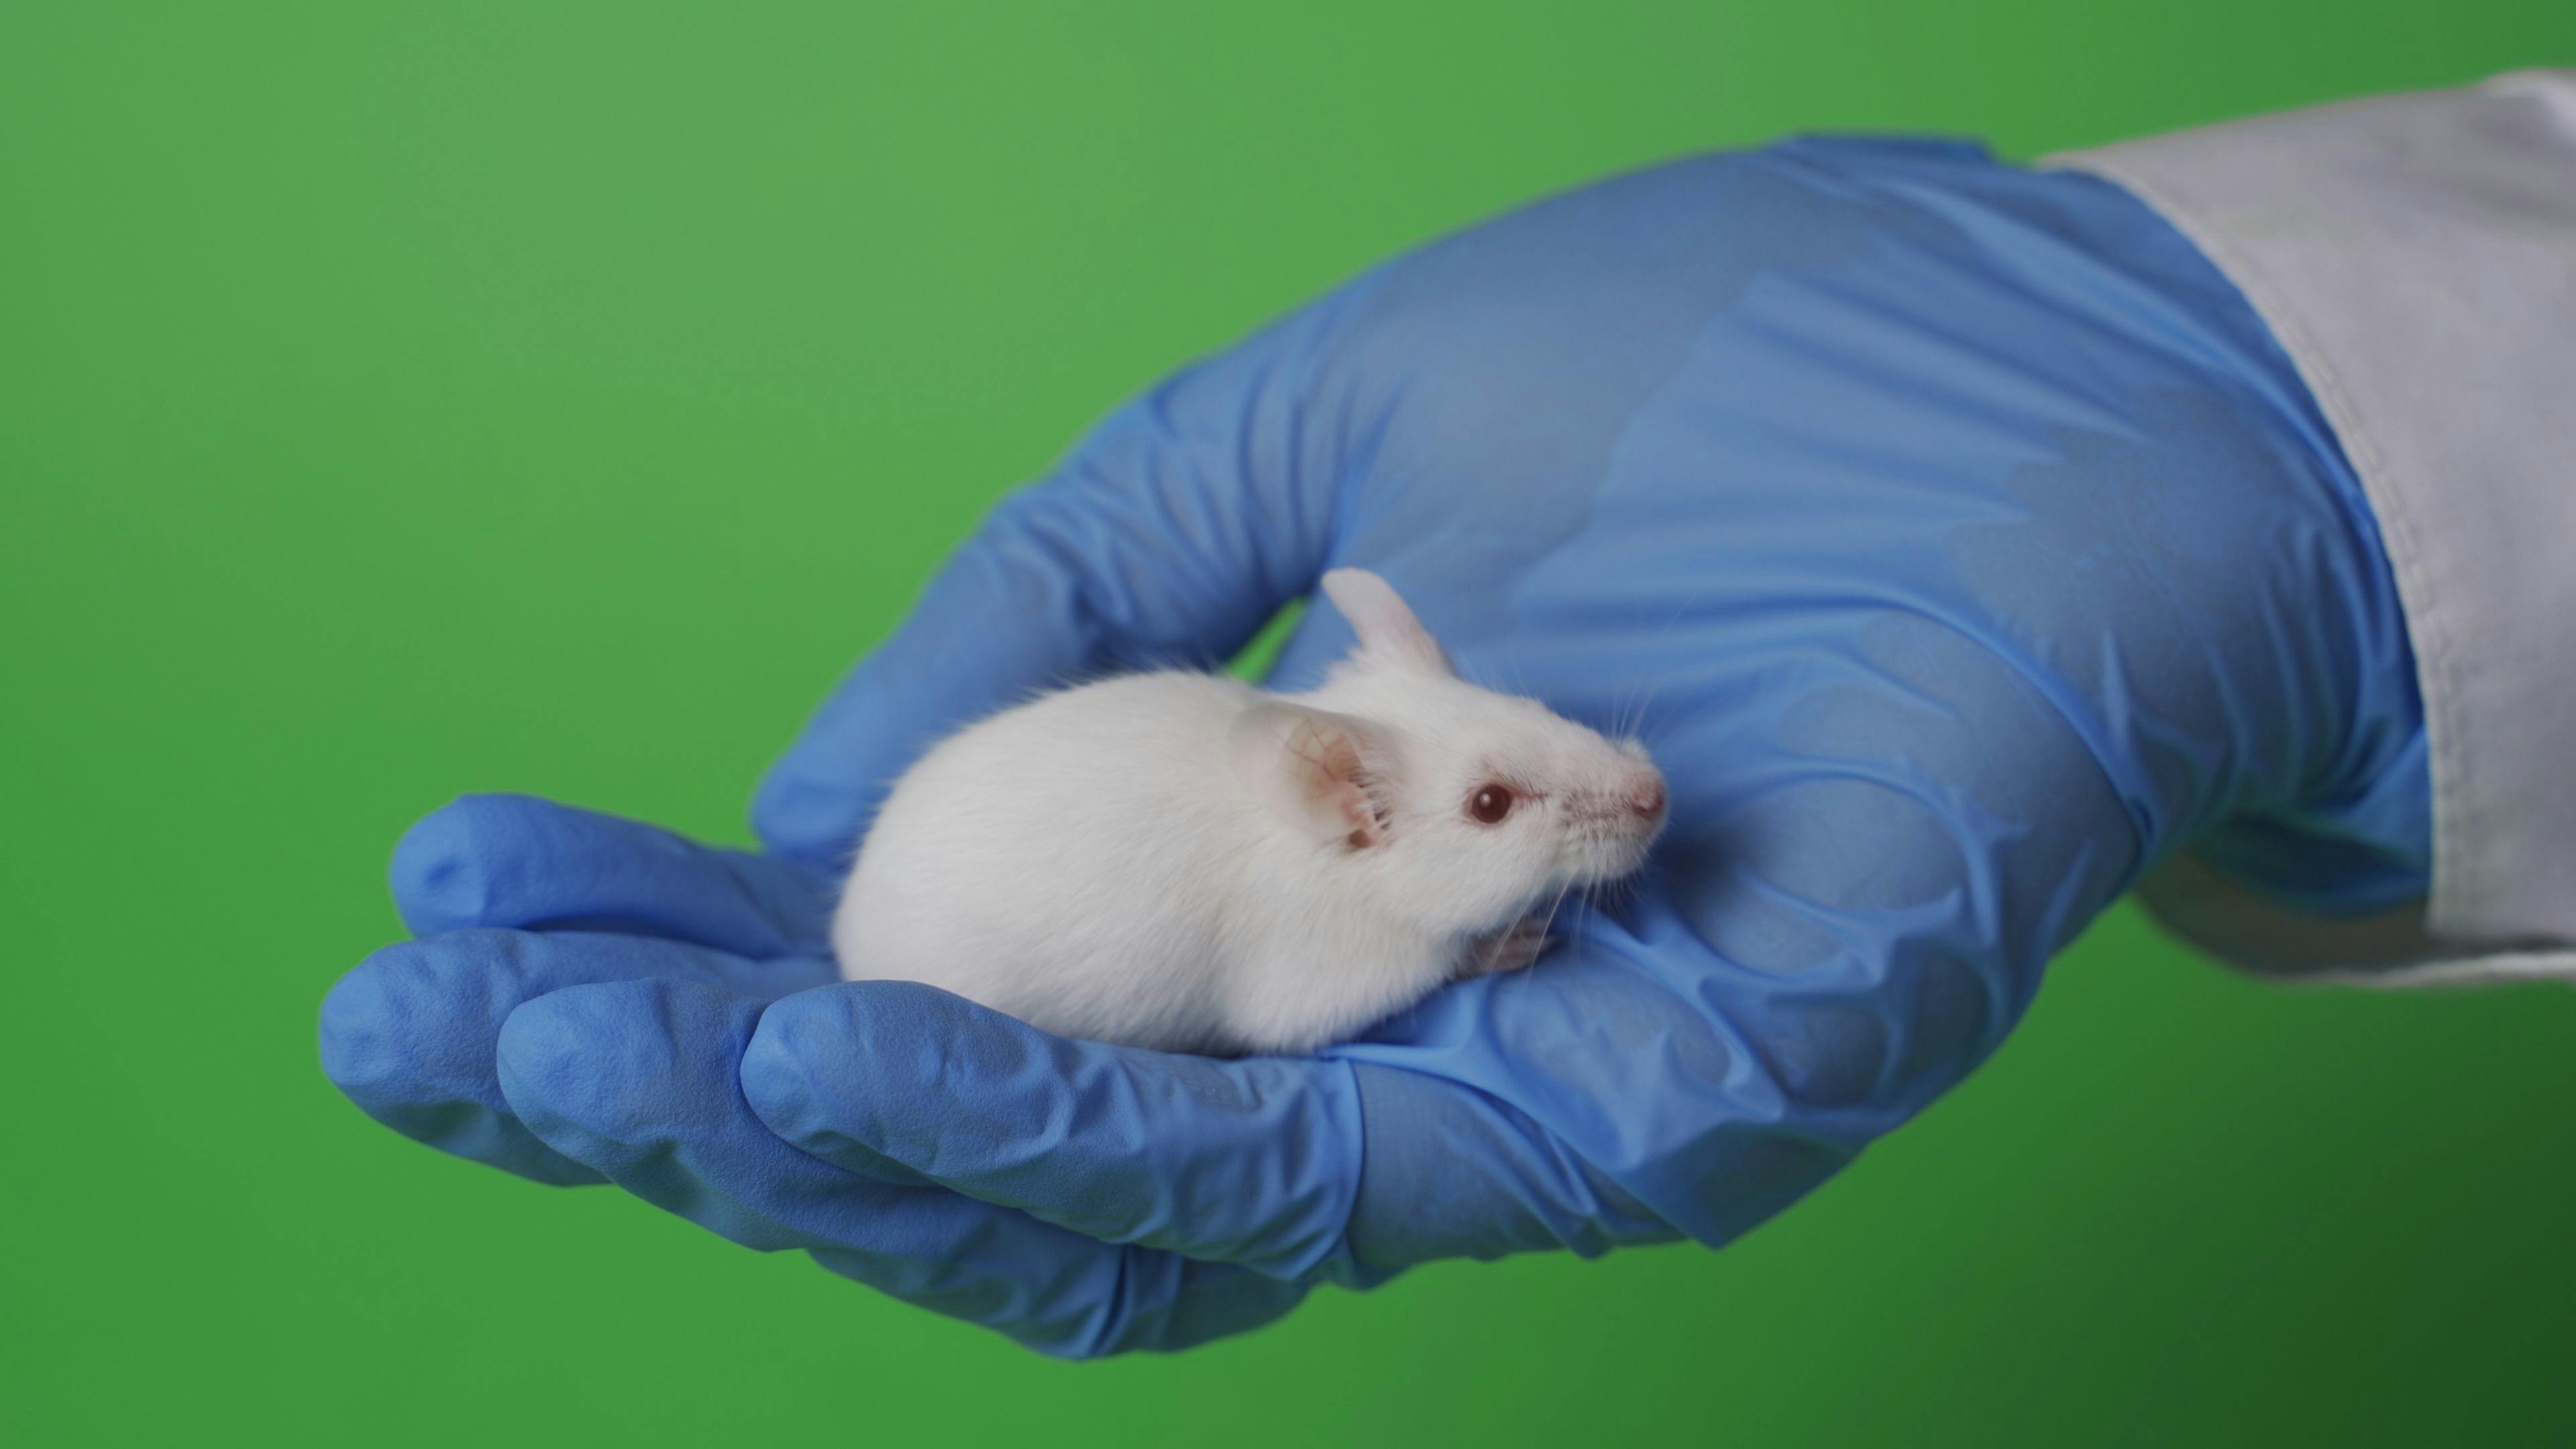 Wistar Institute Produces HIV-Fighting Tier-2 Antibodies in Mice